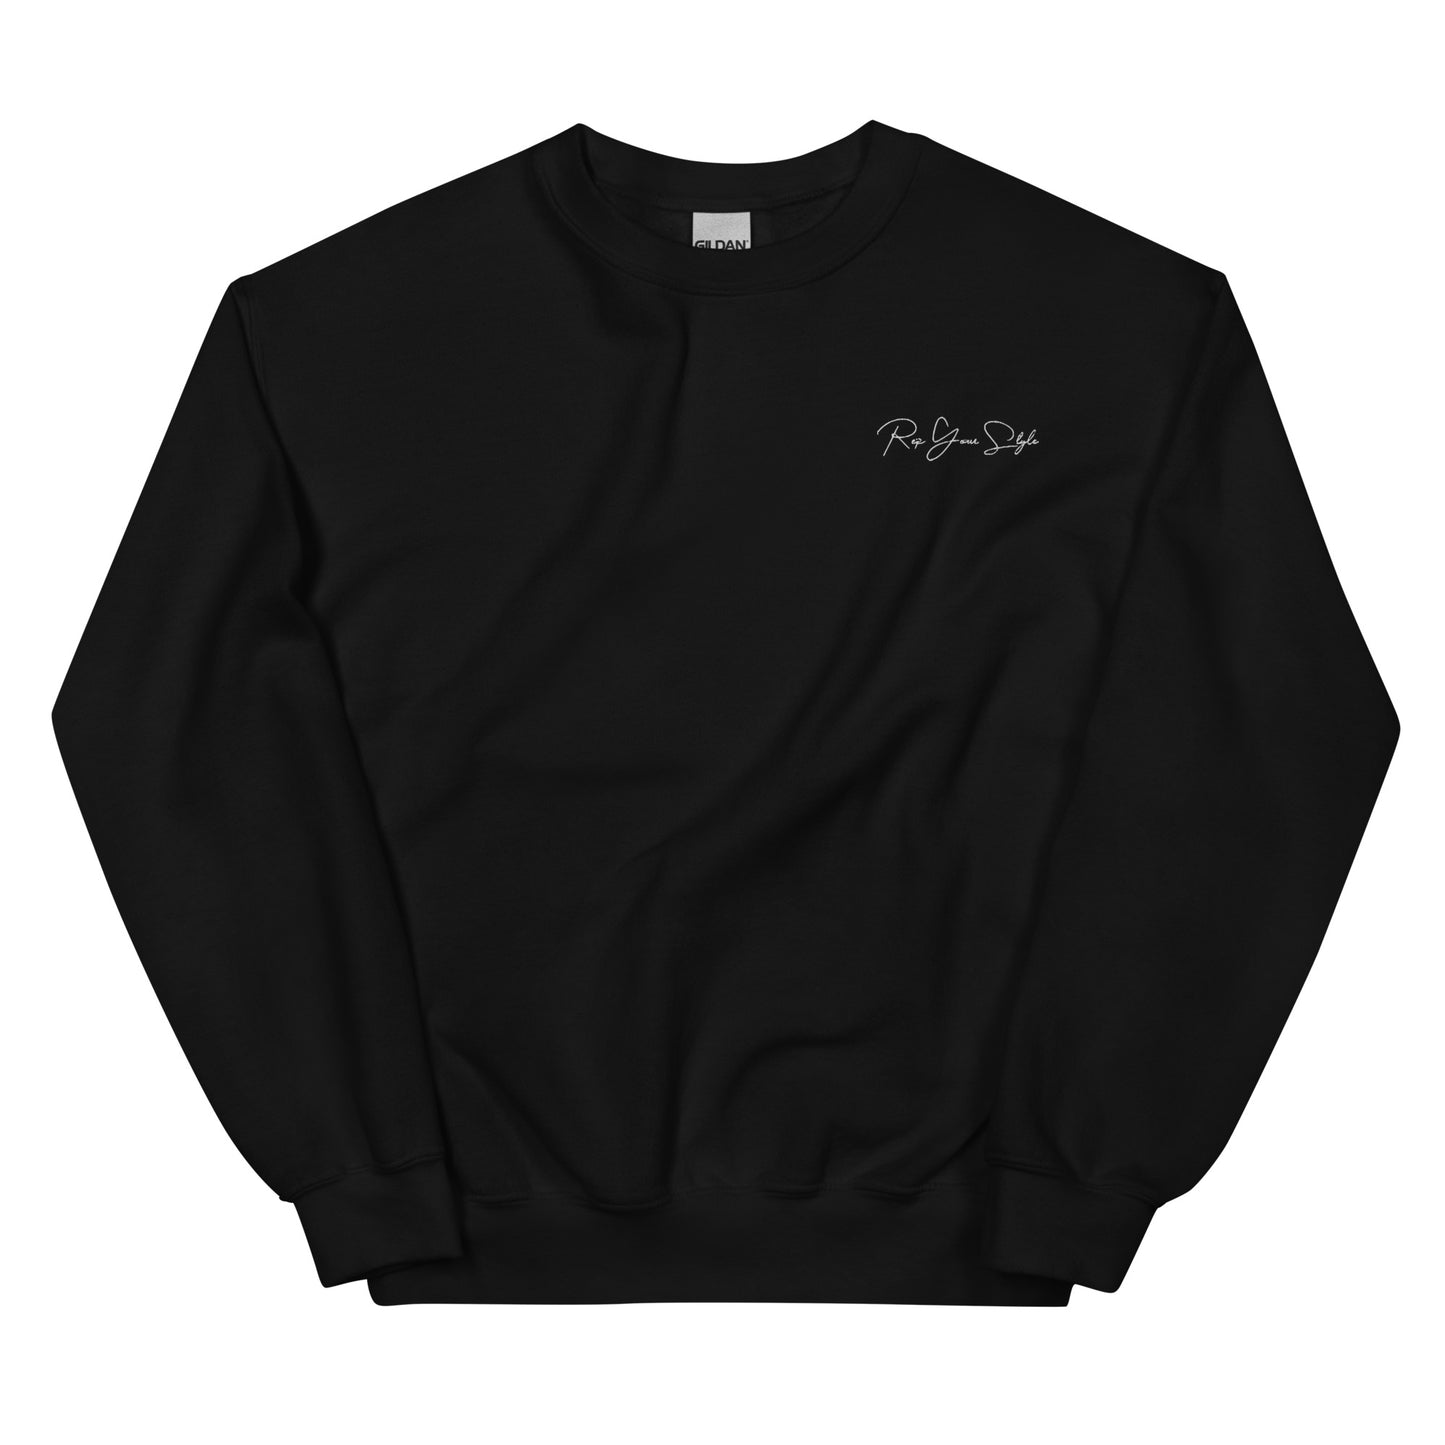 Unisex black sweatshirt